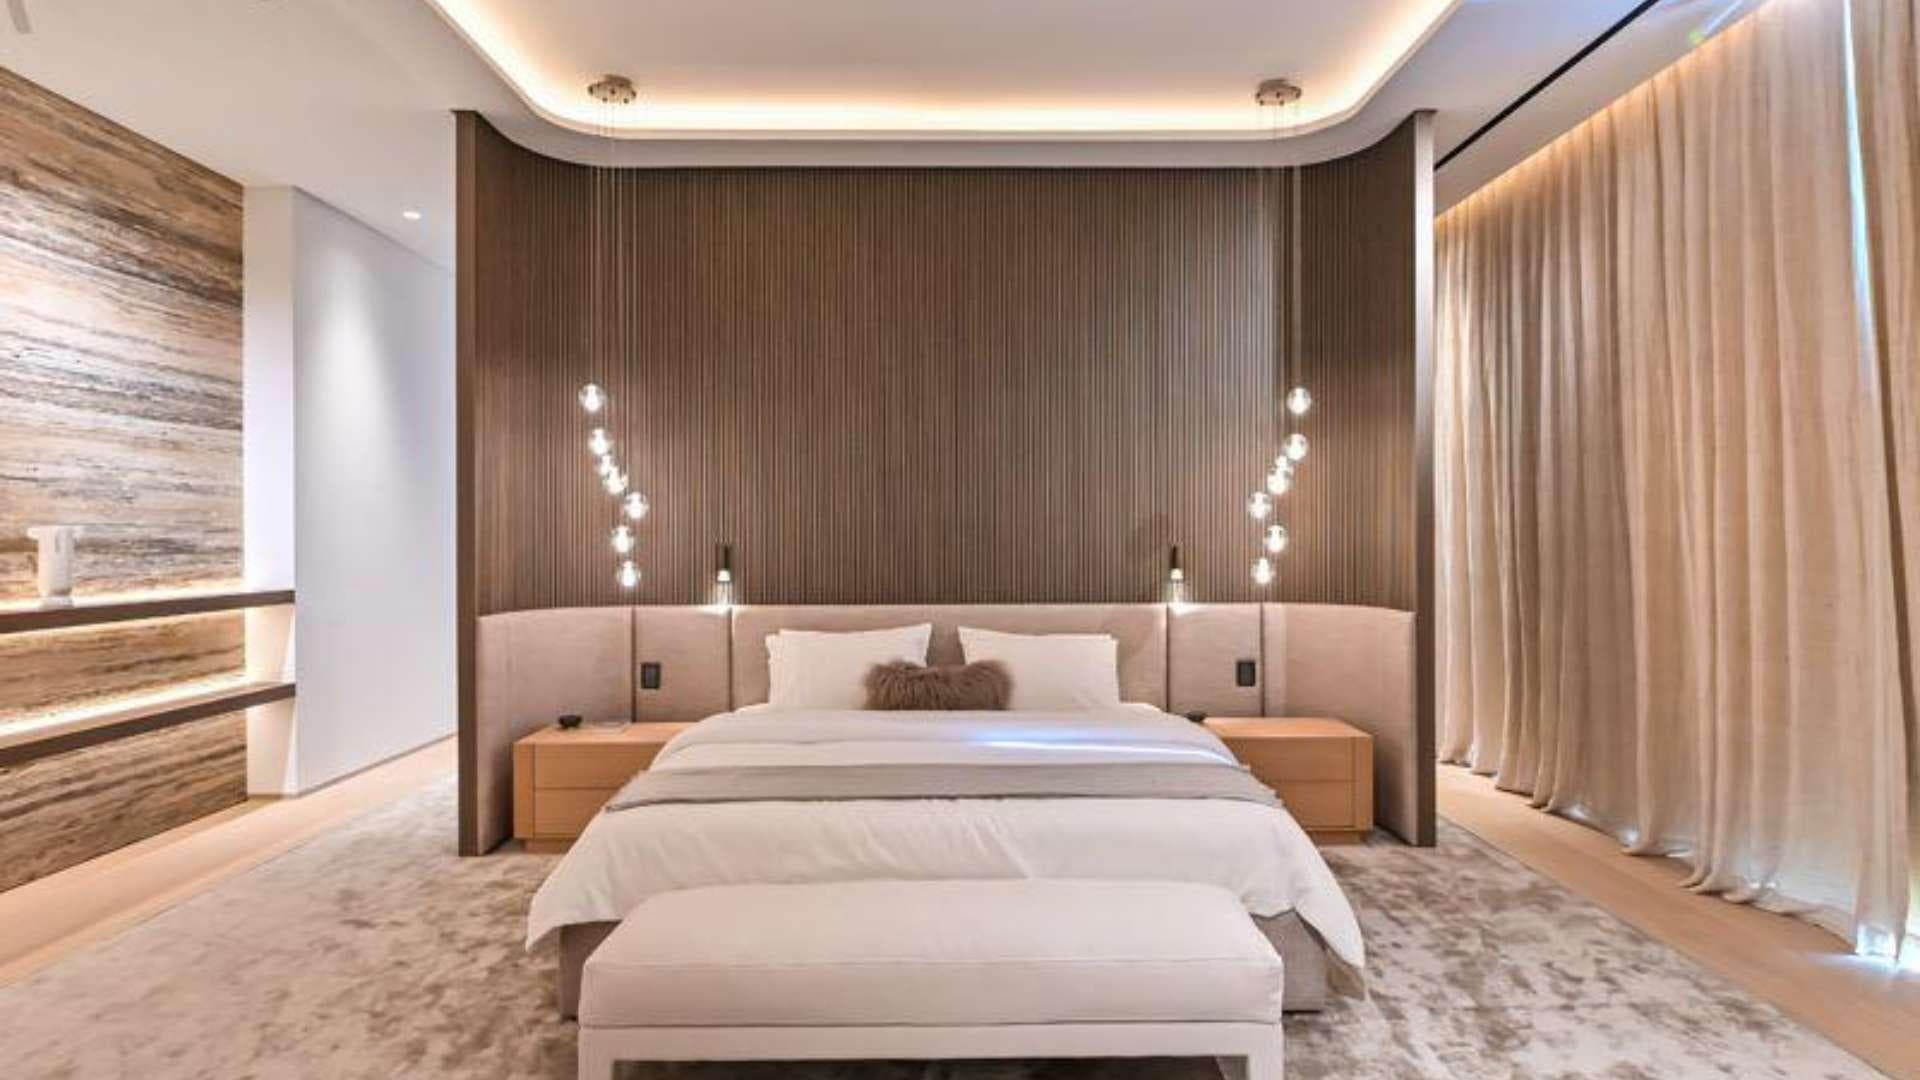 7 Bedroom Villa For Sale Dubai Hills Lp20693 7b6c7bfadba74c.jpg